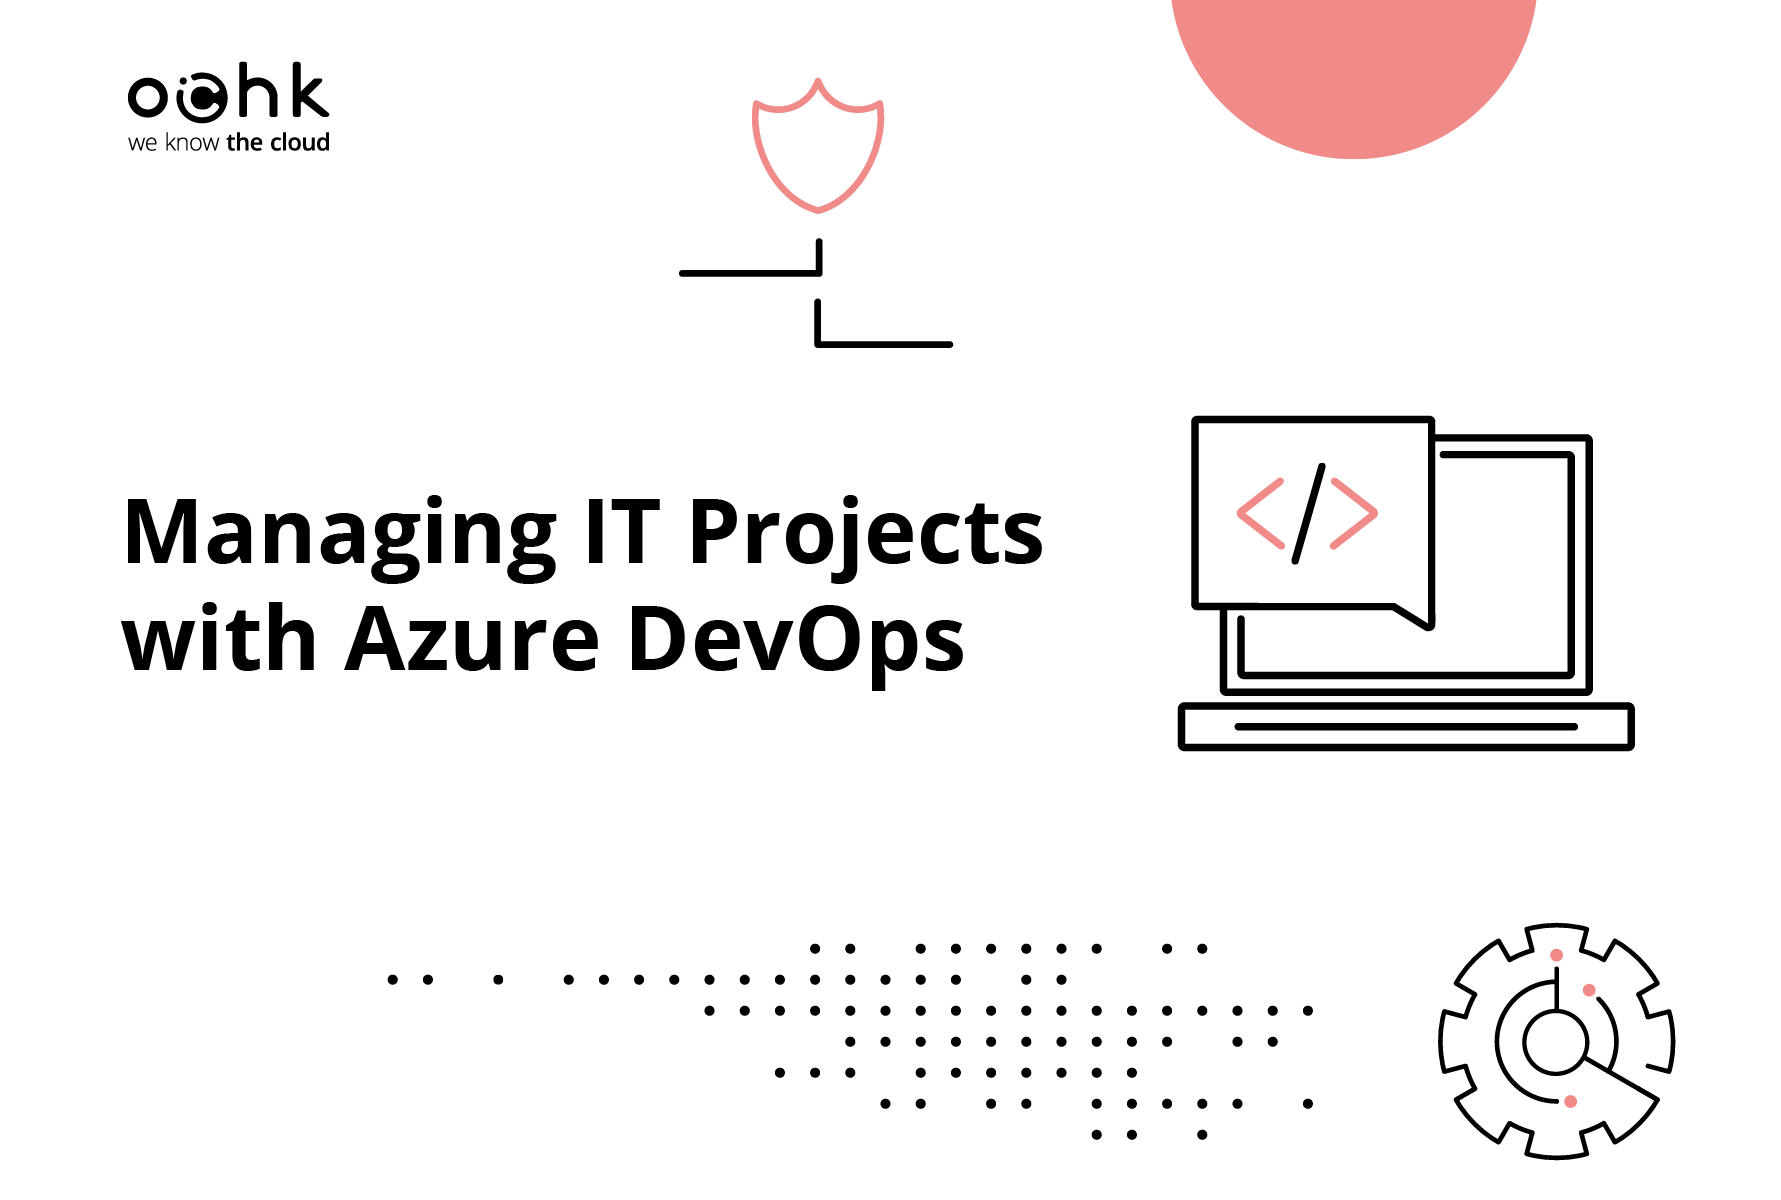 How does Azure DevOps facilitate IT project management?